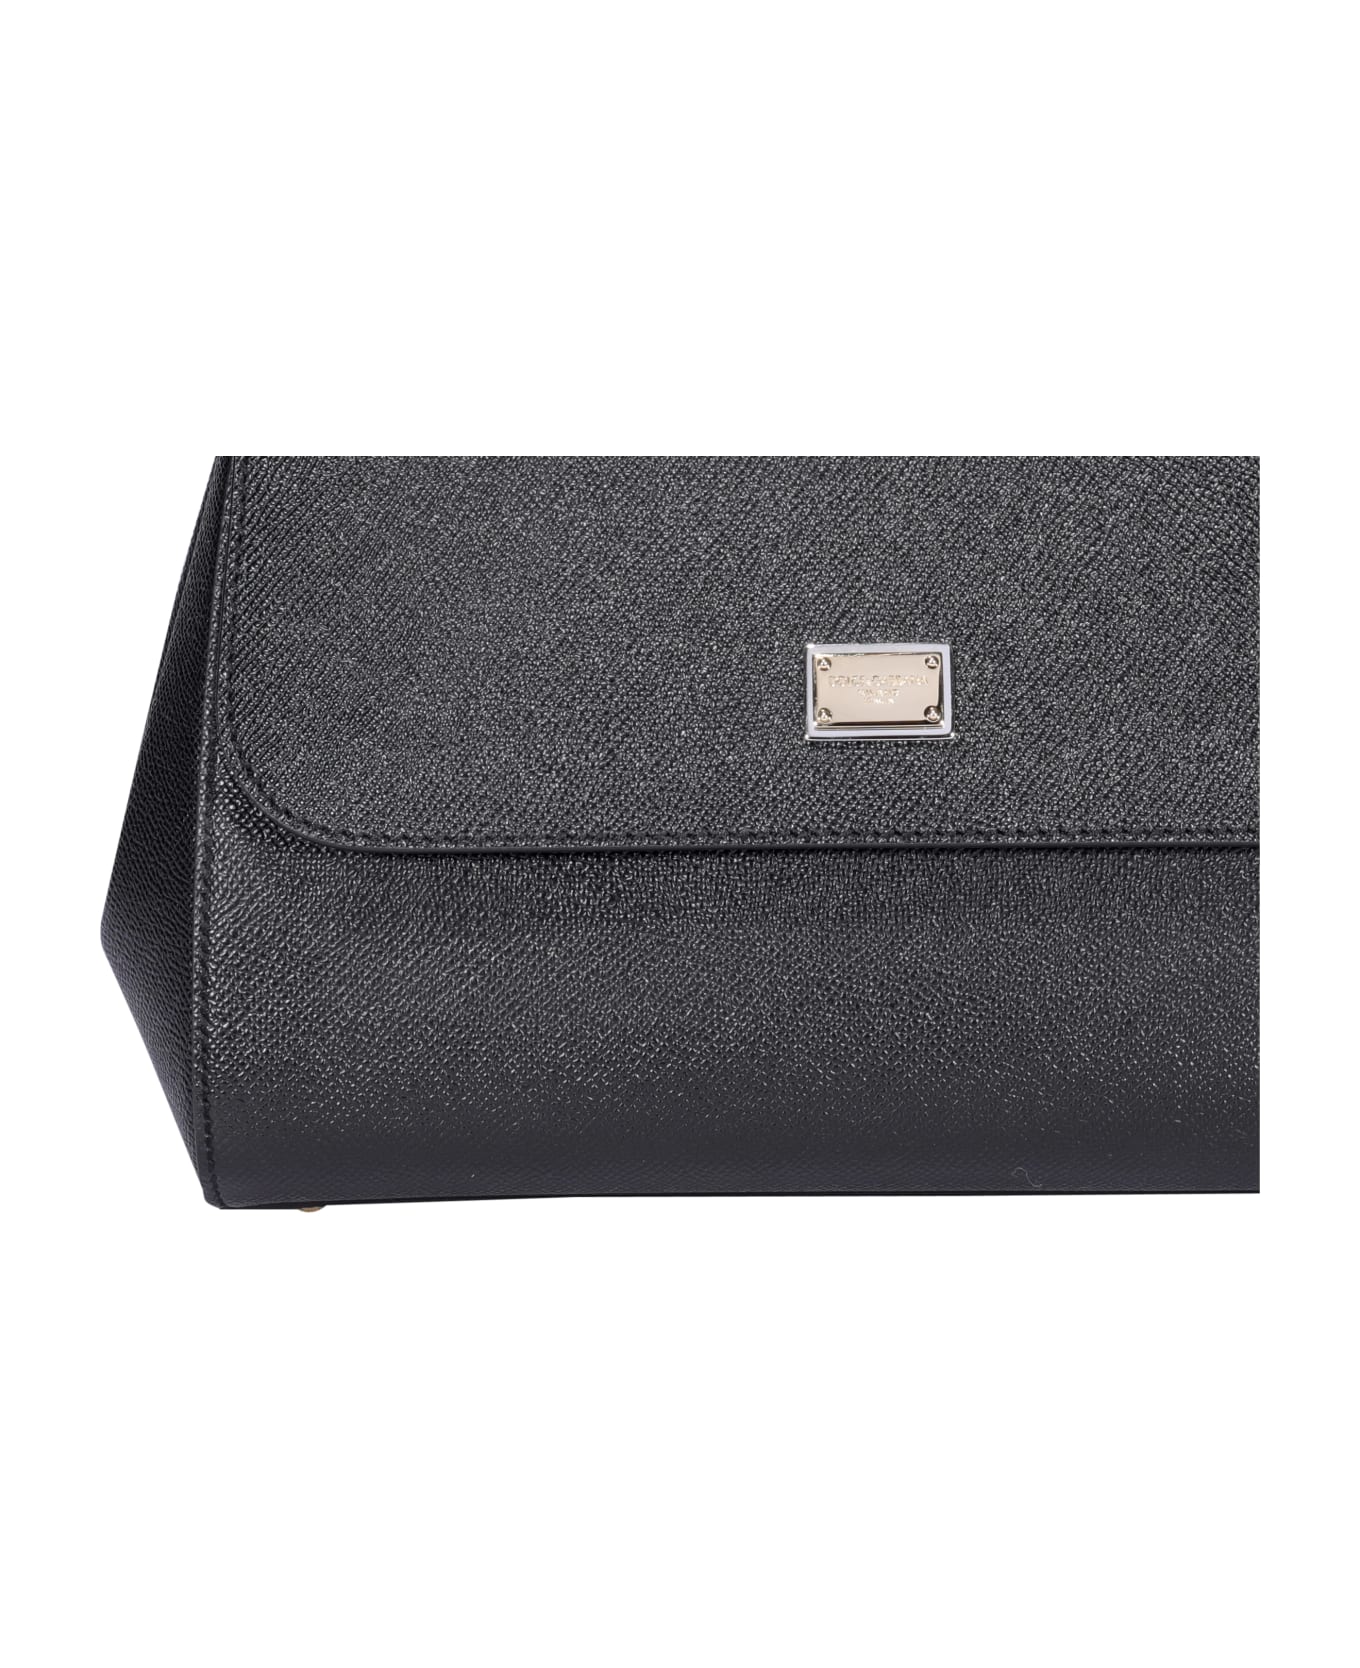 Dolce & Gabbana Medium Sicily Handbag - Nero